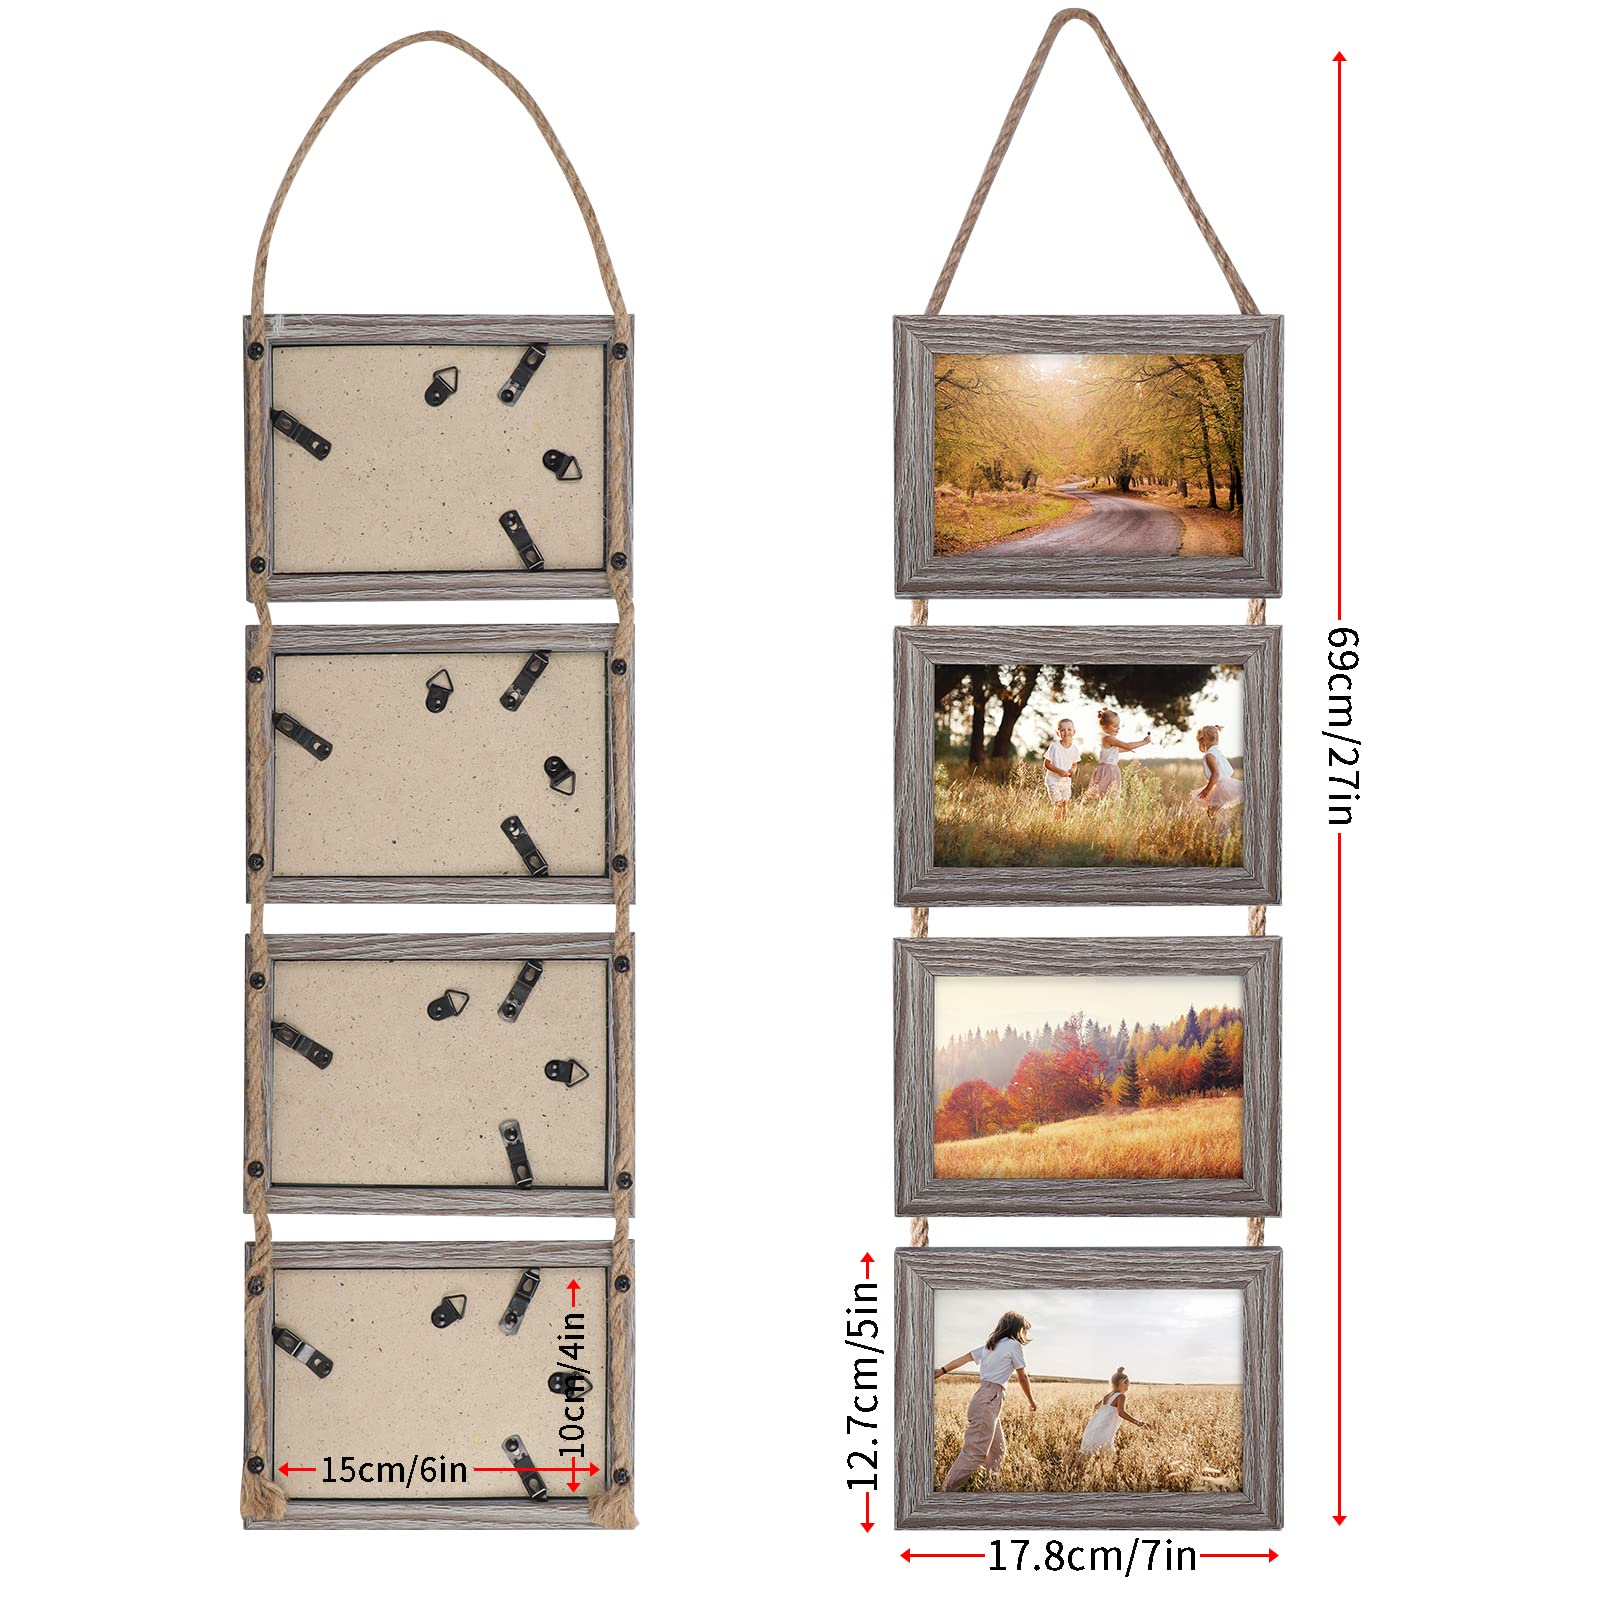 WOODARIES Hanging Collage Picture Frame - 4” x 6” Photos - Walnut - Se –  Wallniture